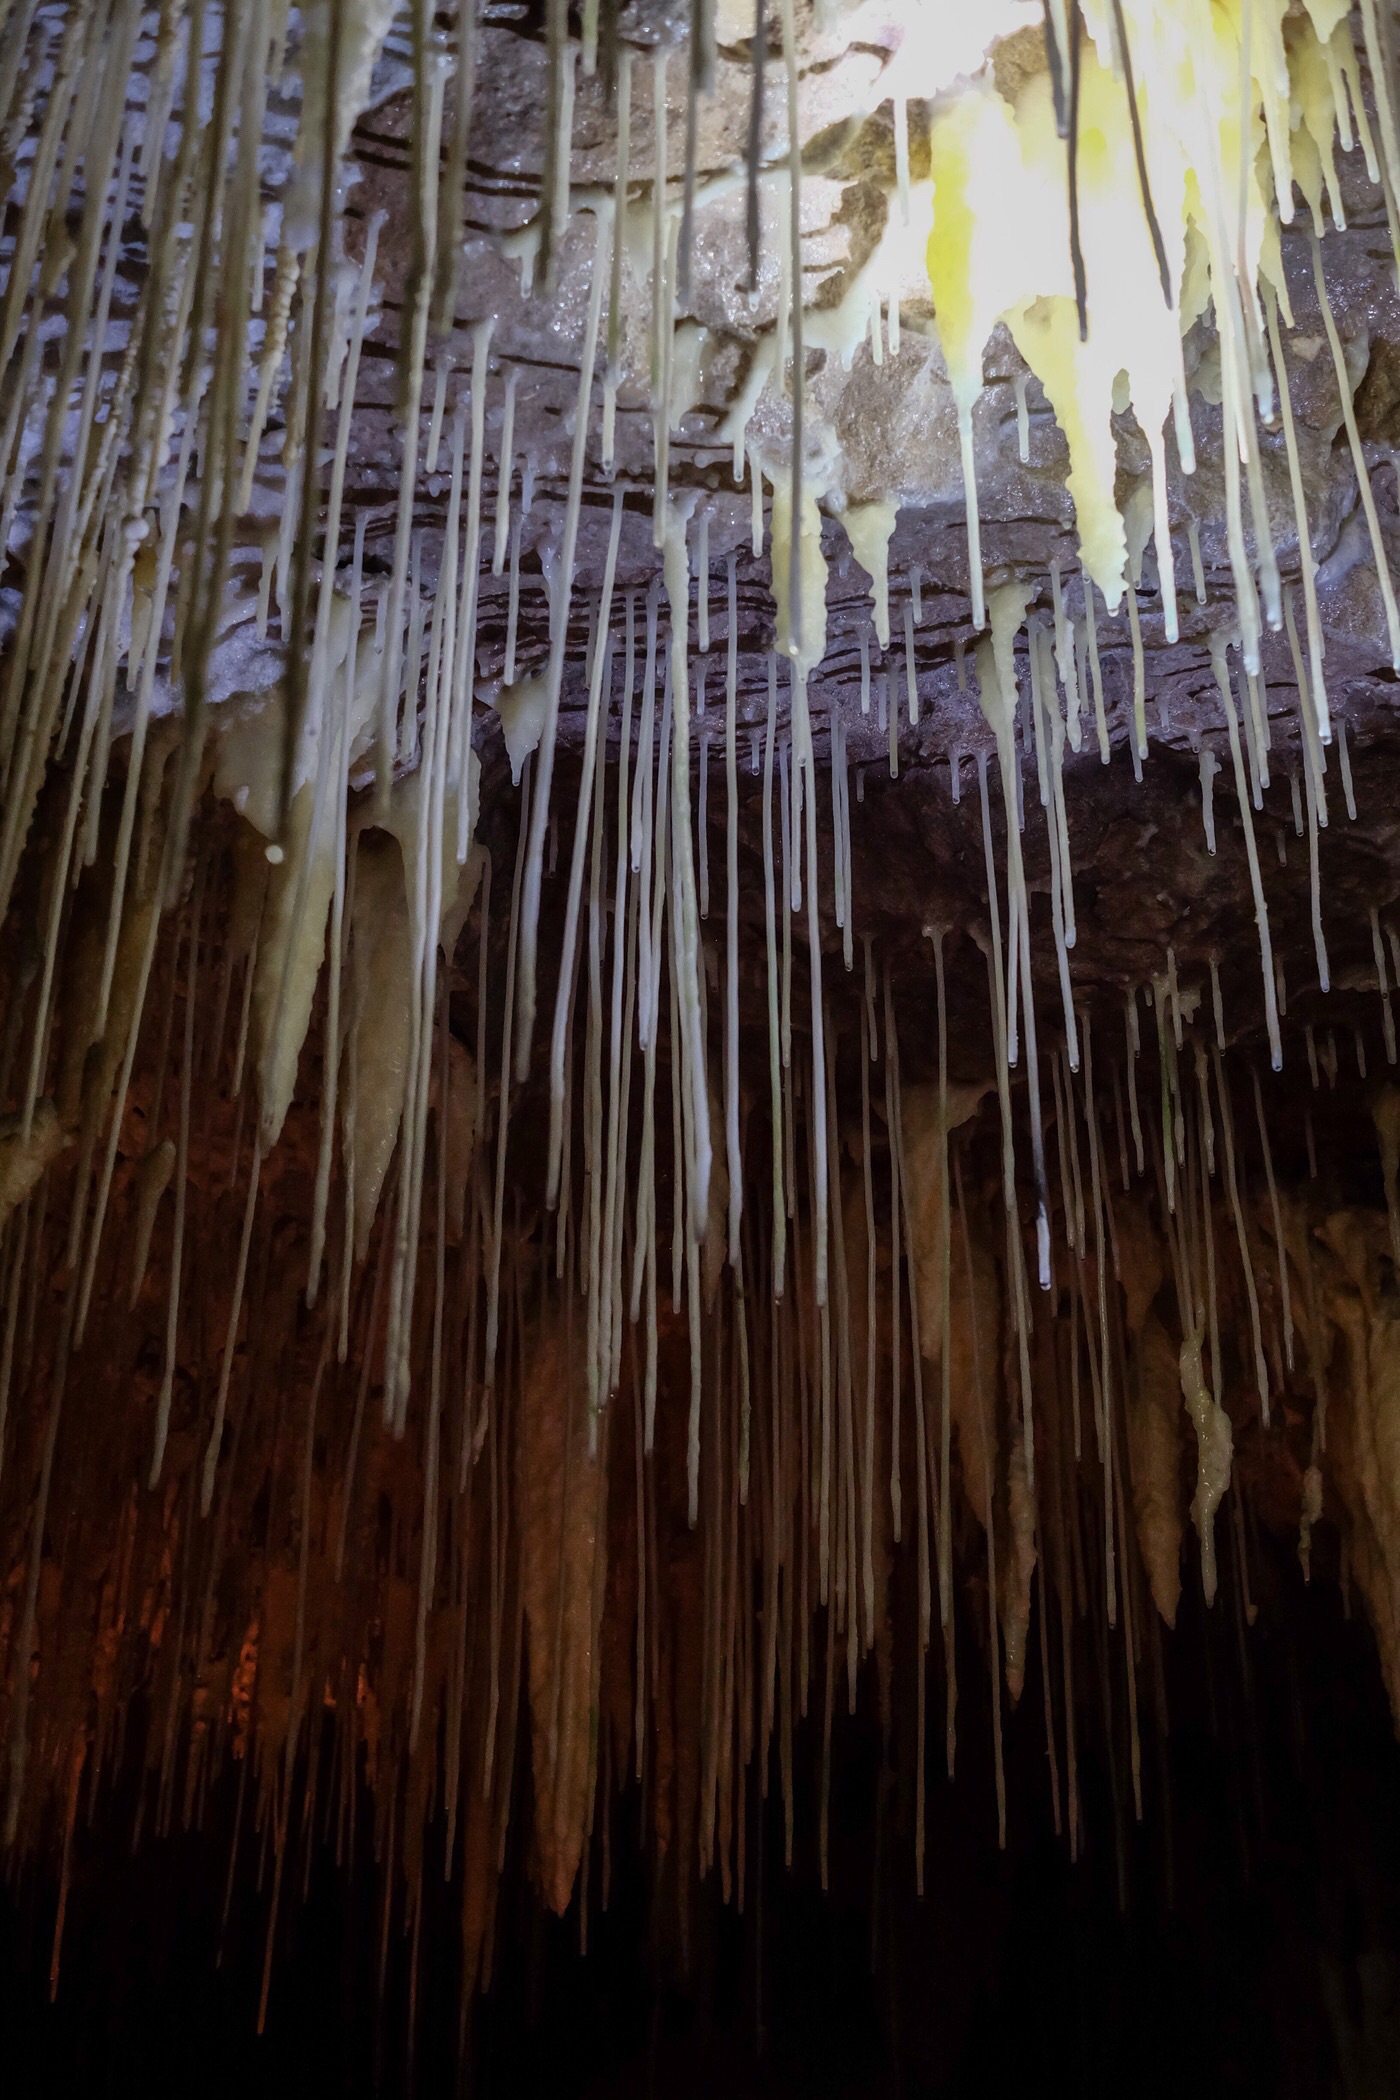 "Straws" in Lake cave — Western Australia